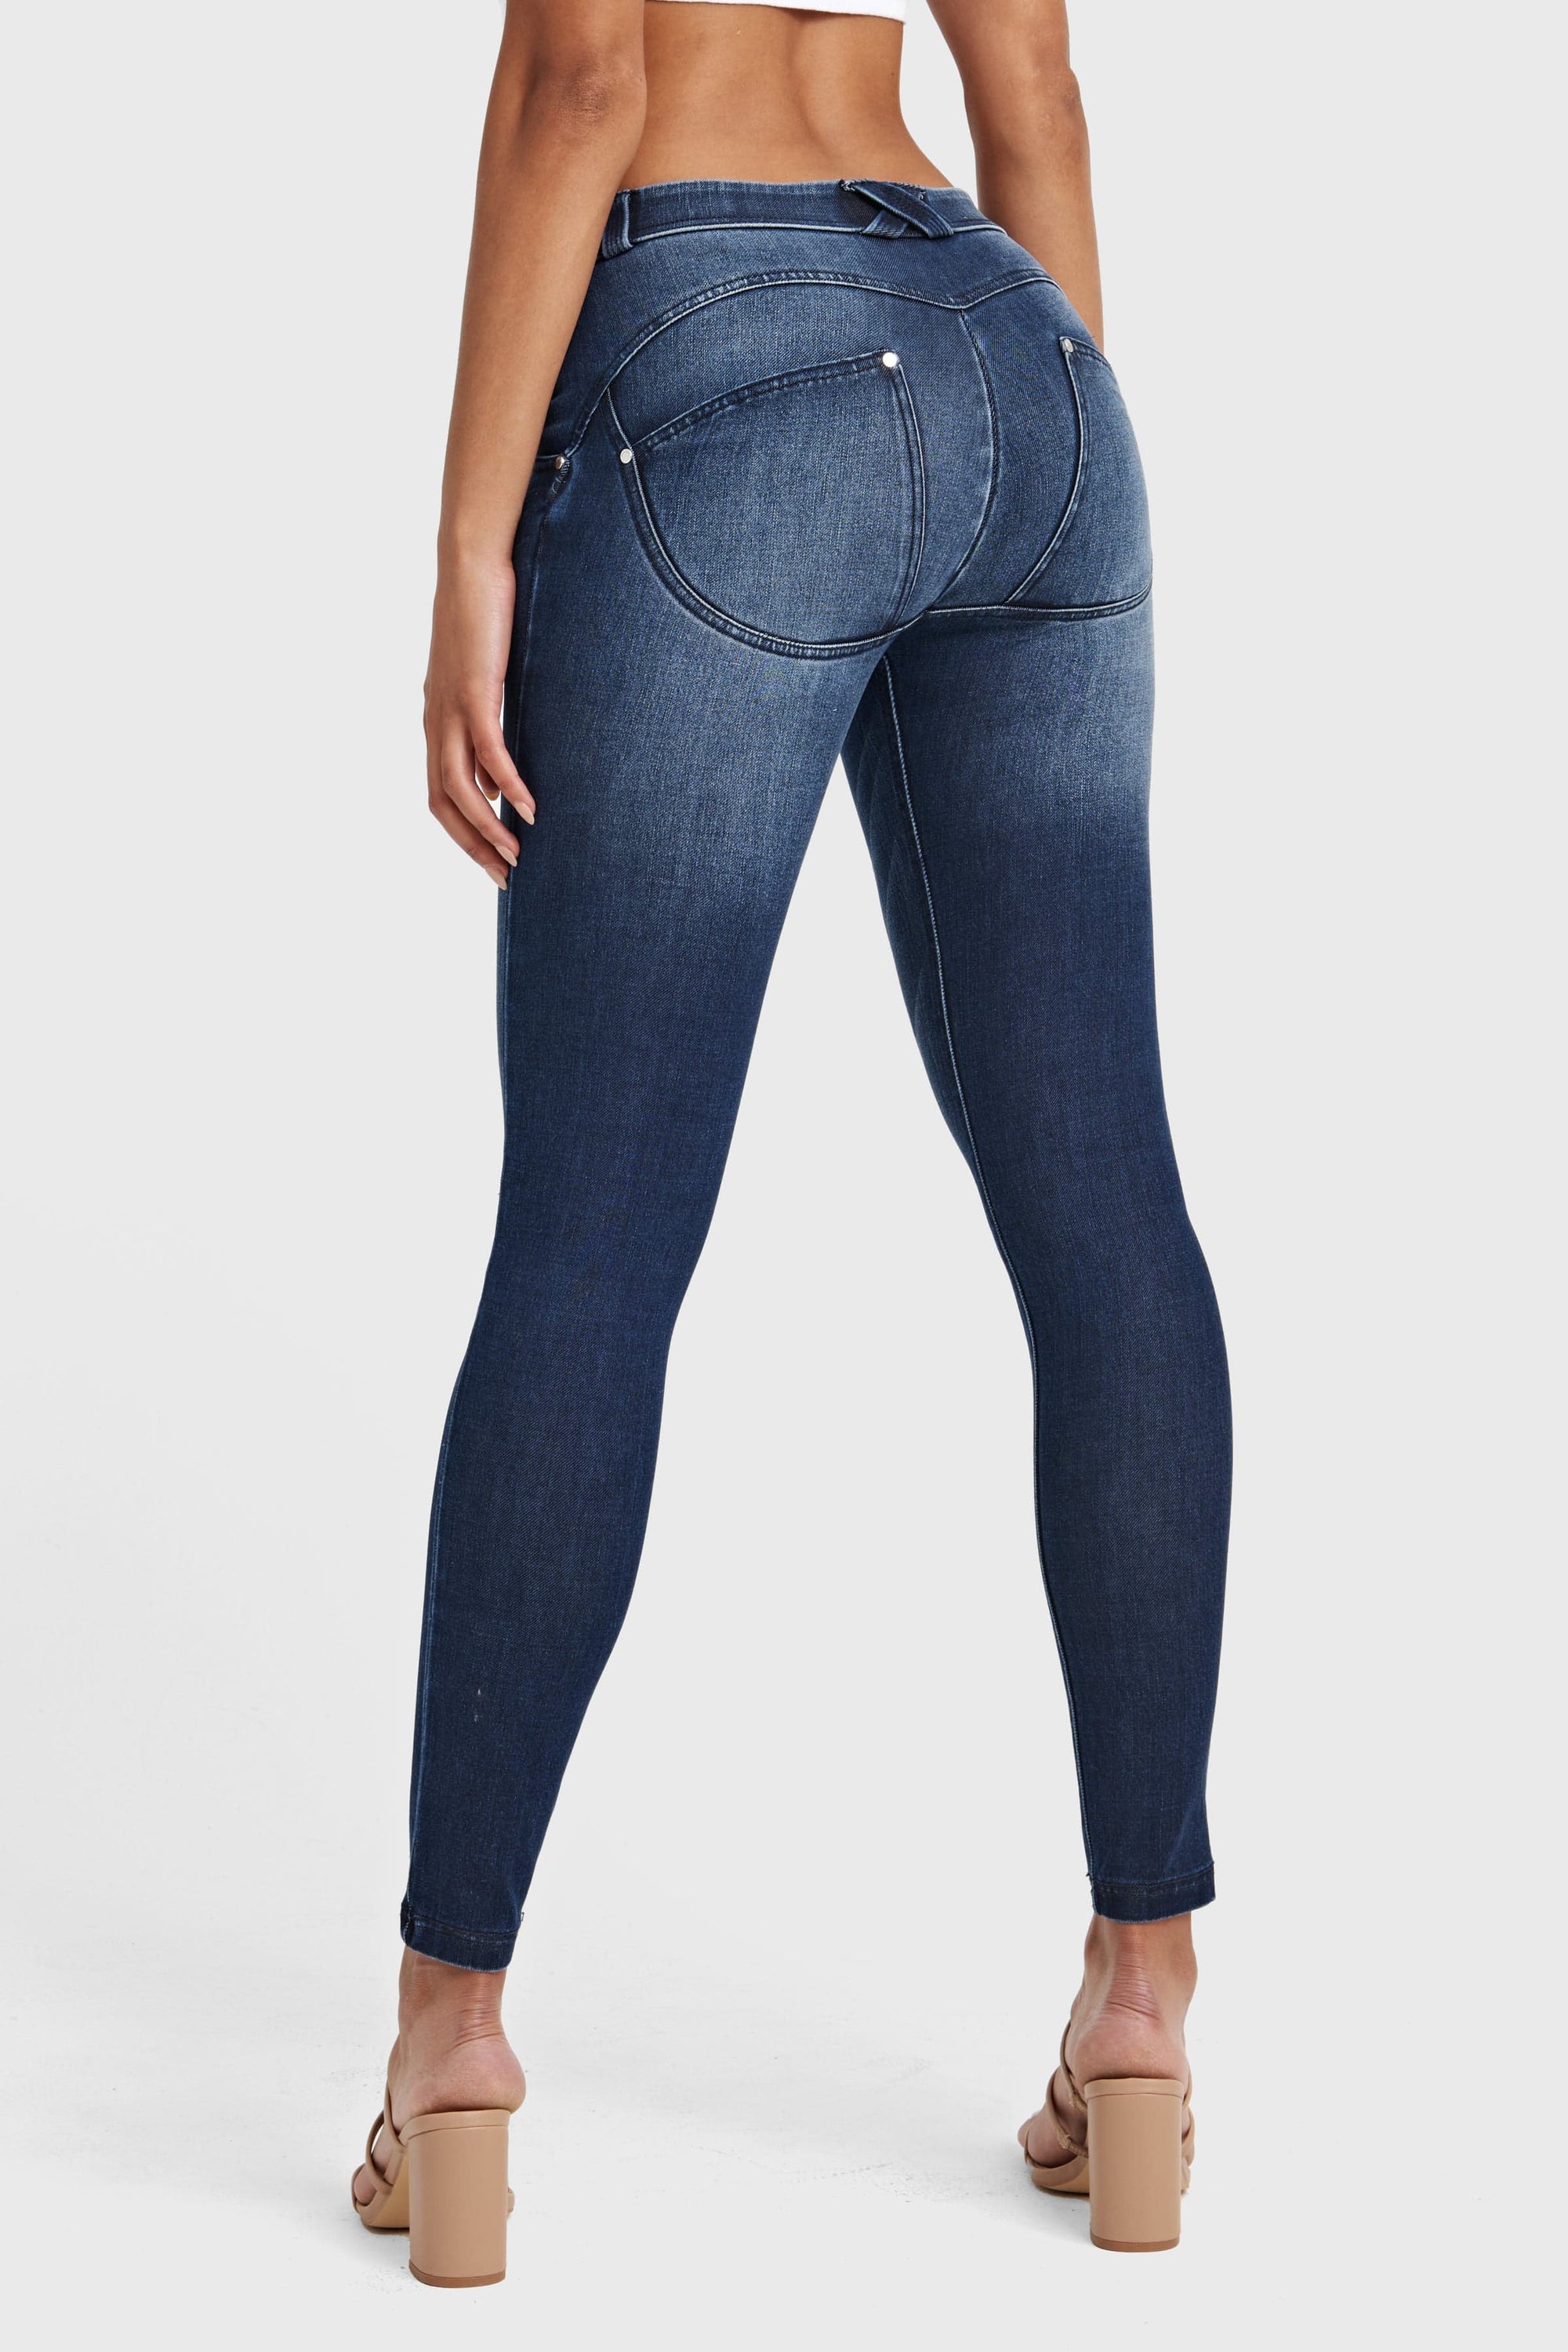 WR.UP® Snug Jeans - Mid Rise - Full Length - Dark Blue + Blue Stitching 4